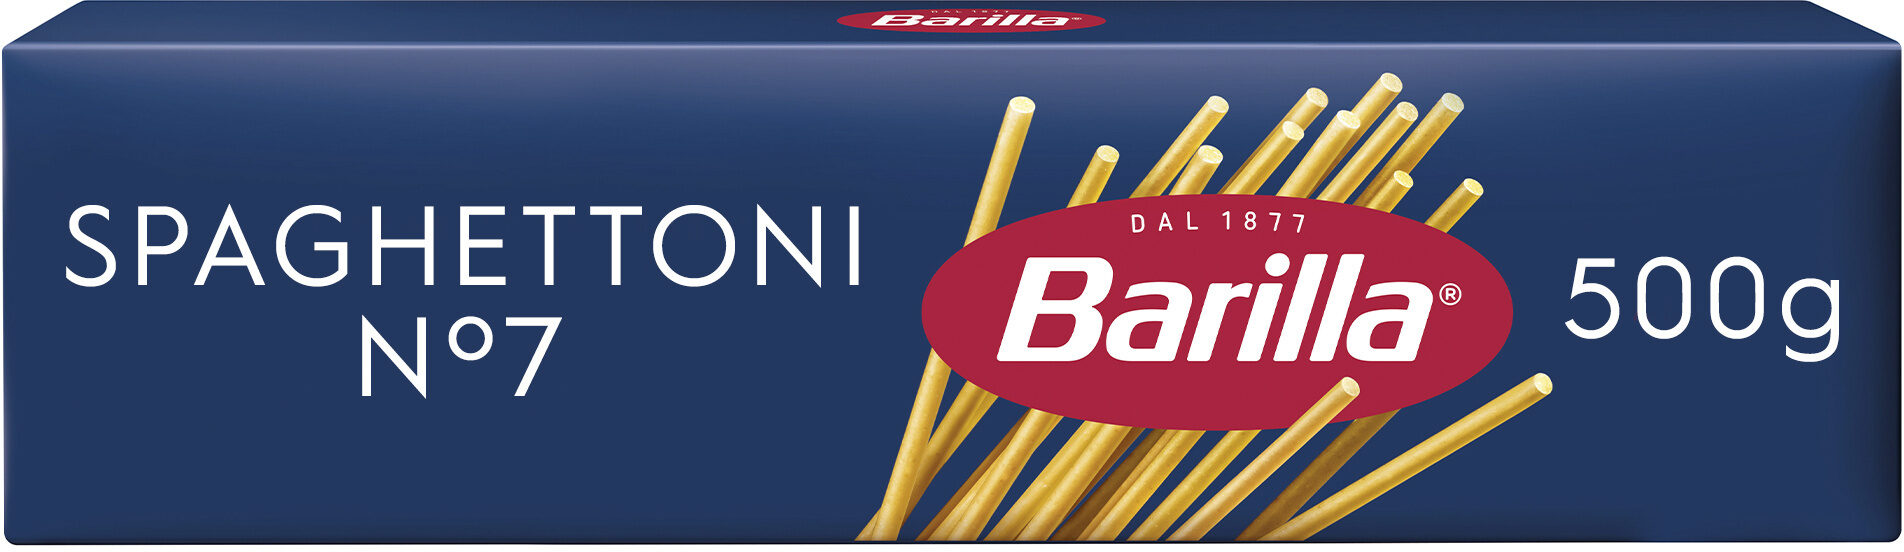 Barilla pates spaghettoni n°7 500g - Product - fr